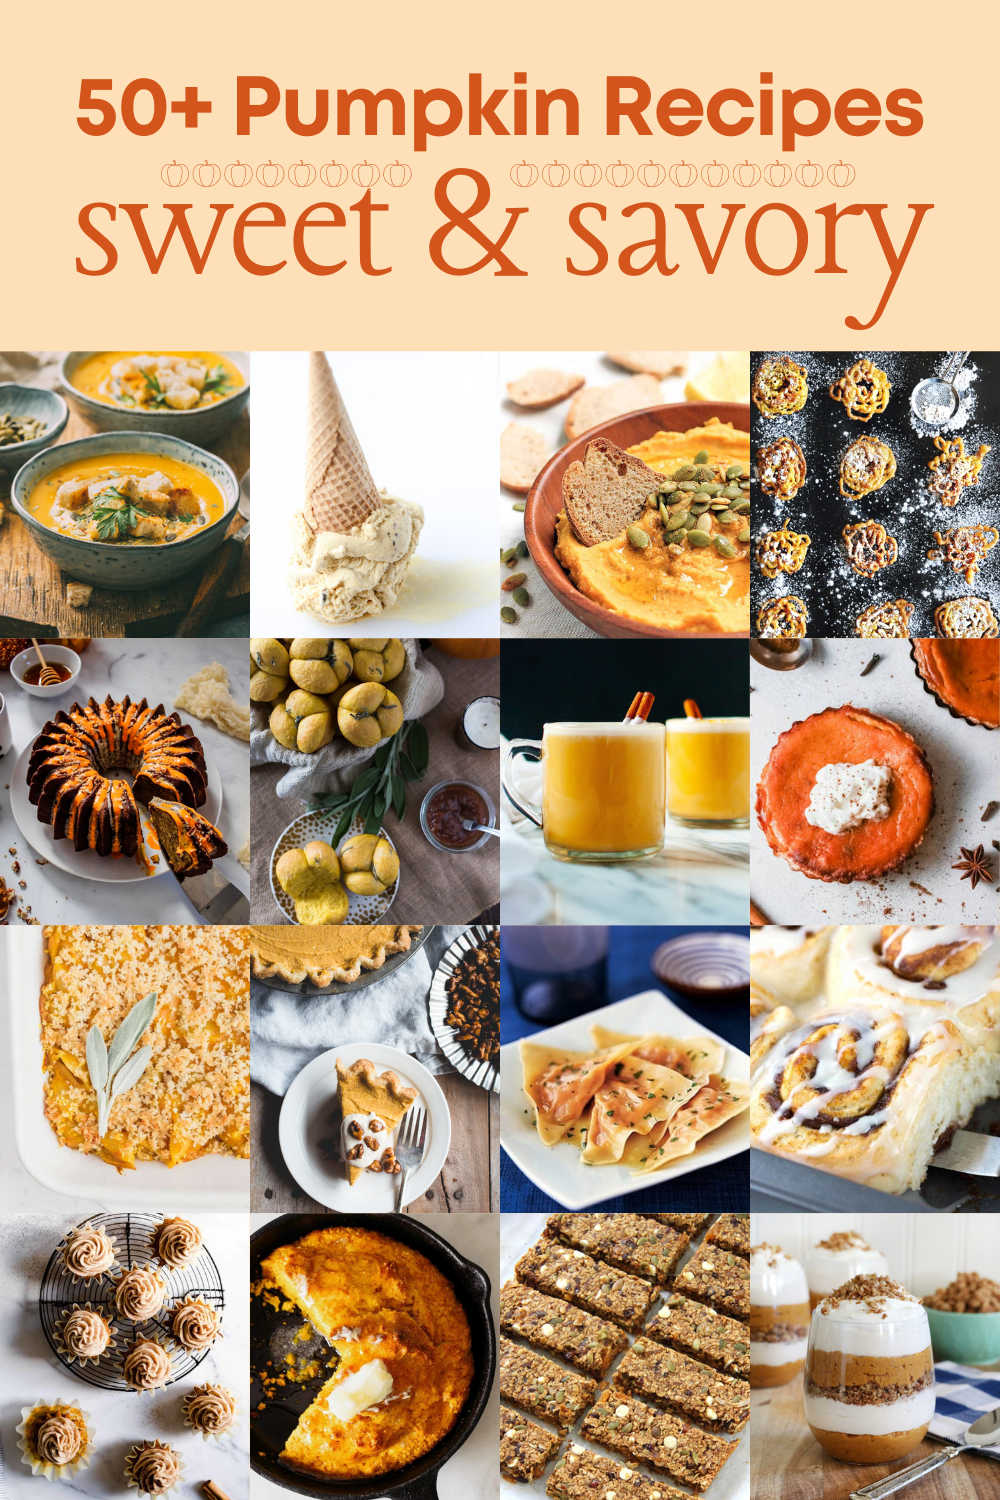 Over 50 Pumpkin Recipes to Enjoy this Fall